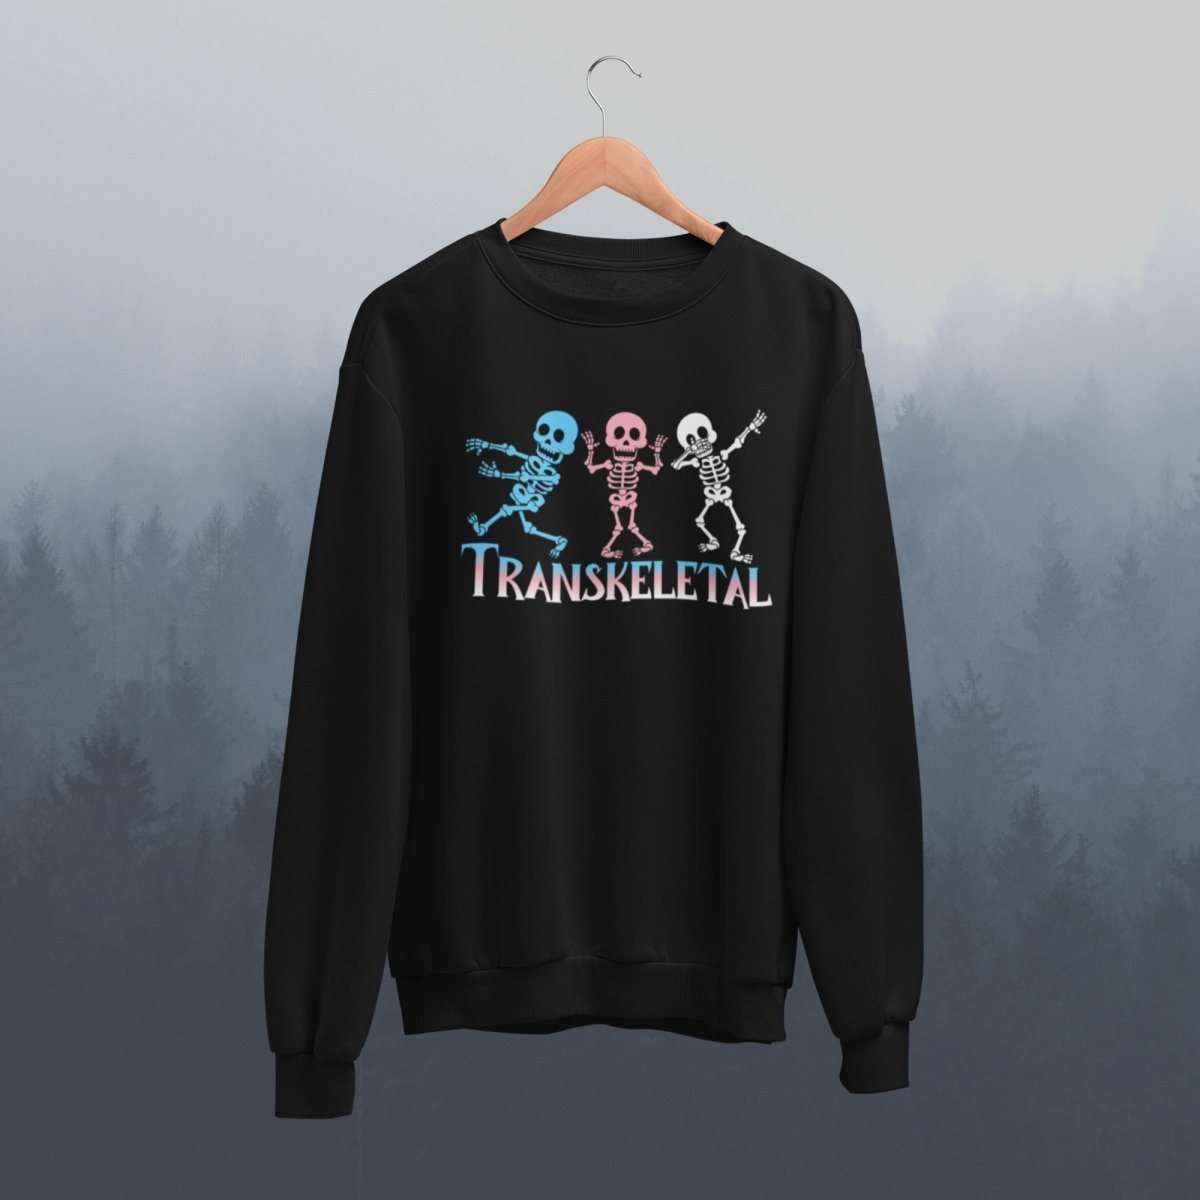 Transgender Skeleton Sweatshirt - On Trend Shirts